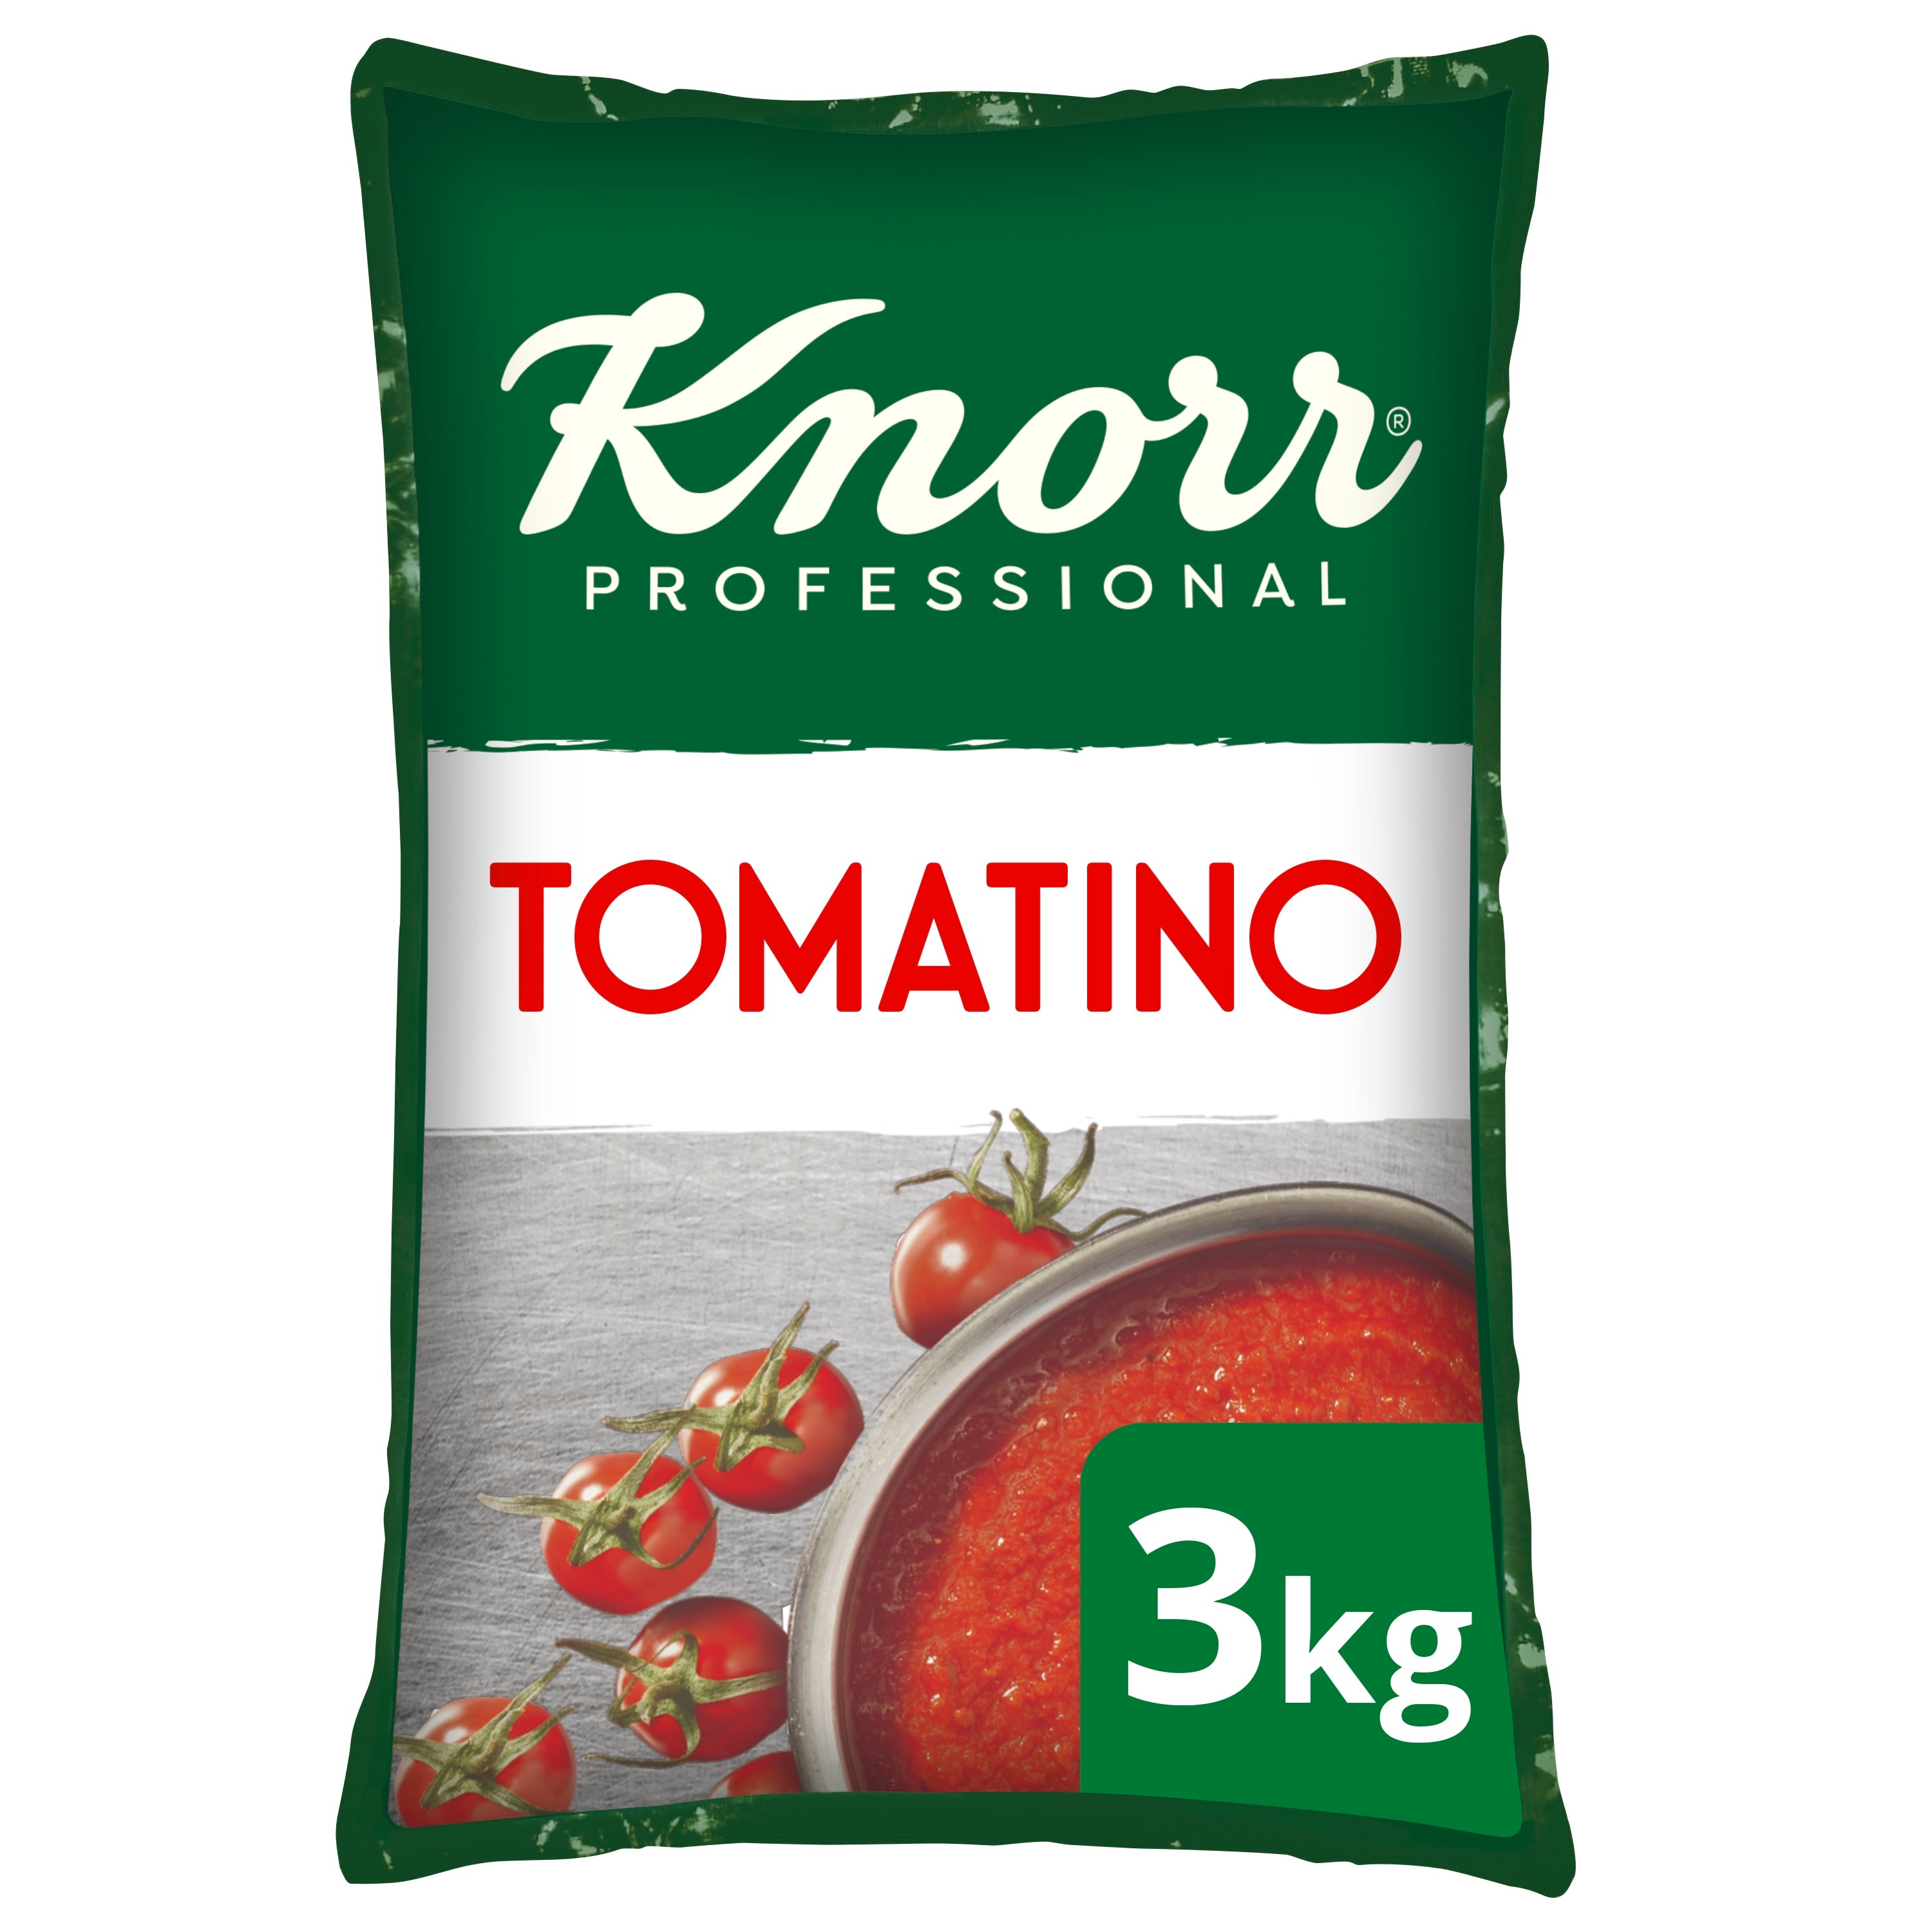 Knorr Professional Italiana Tomatino 3kg - 